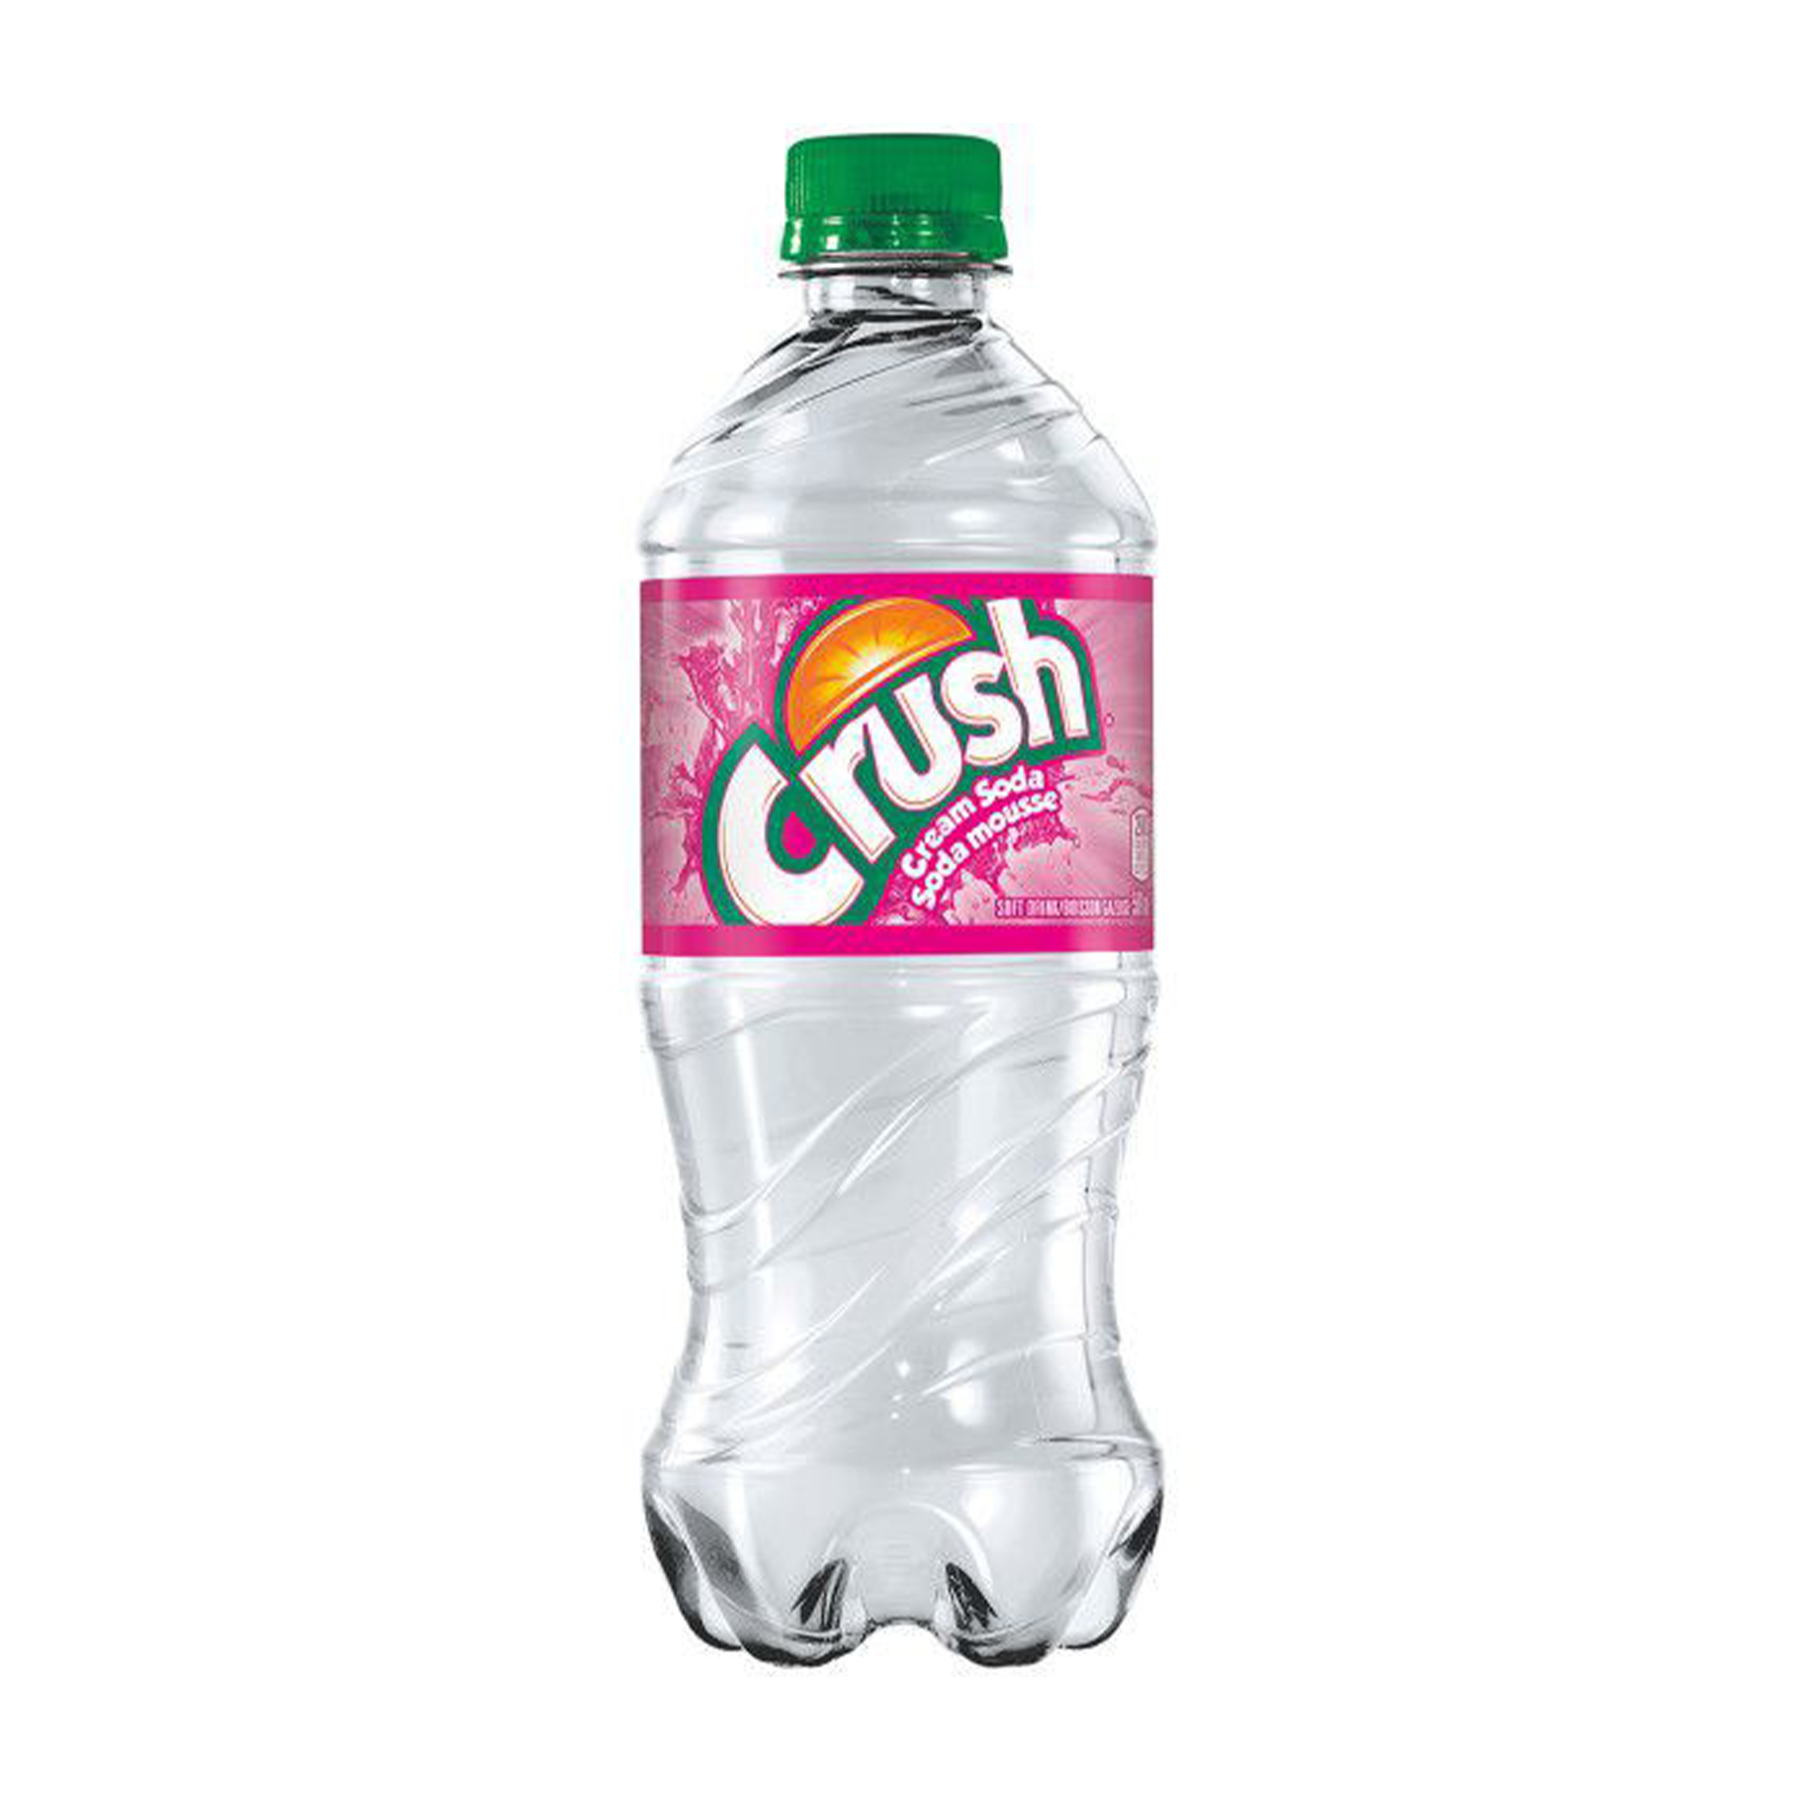 Crush Cream Soda